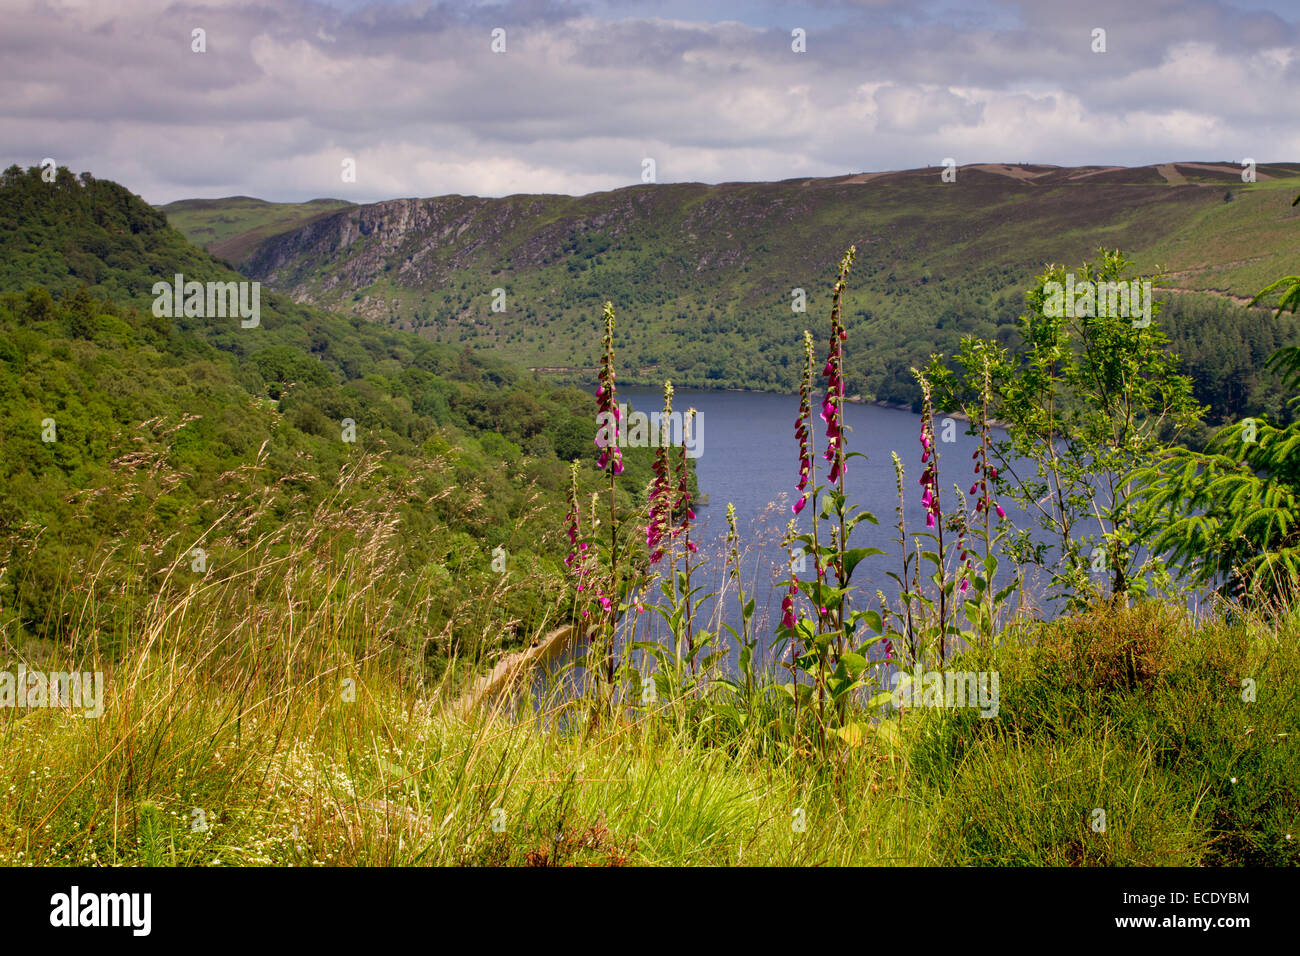 View of the Garreg-ddu Reservoir, Elan Valley, Powys, Wales. June. Stock Photo